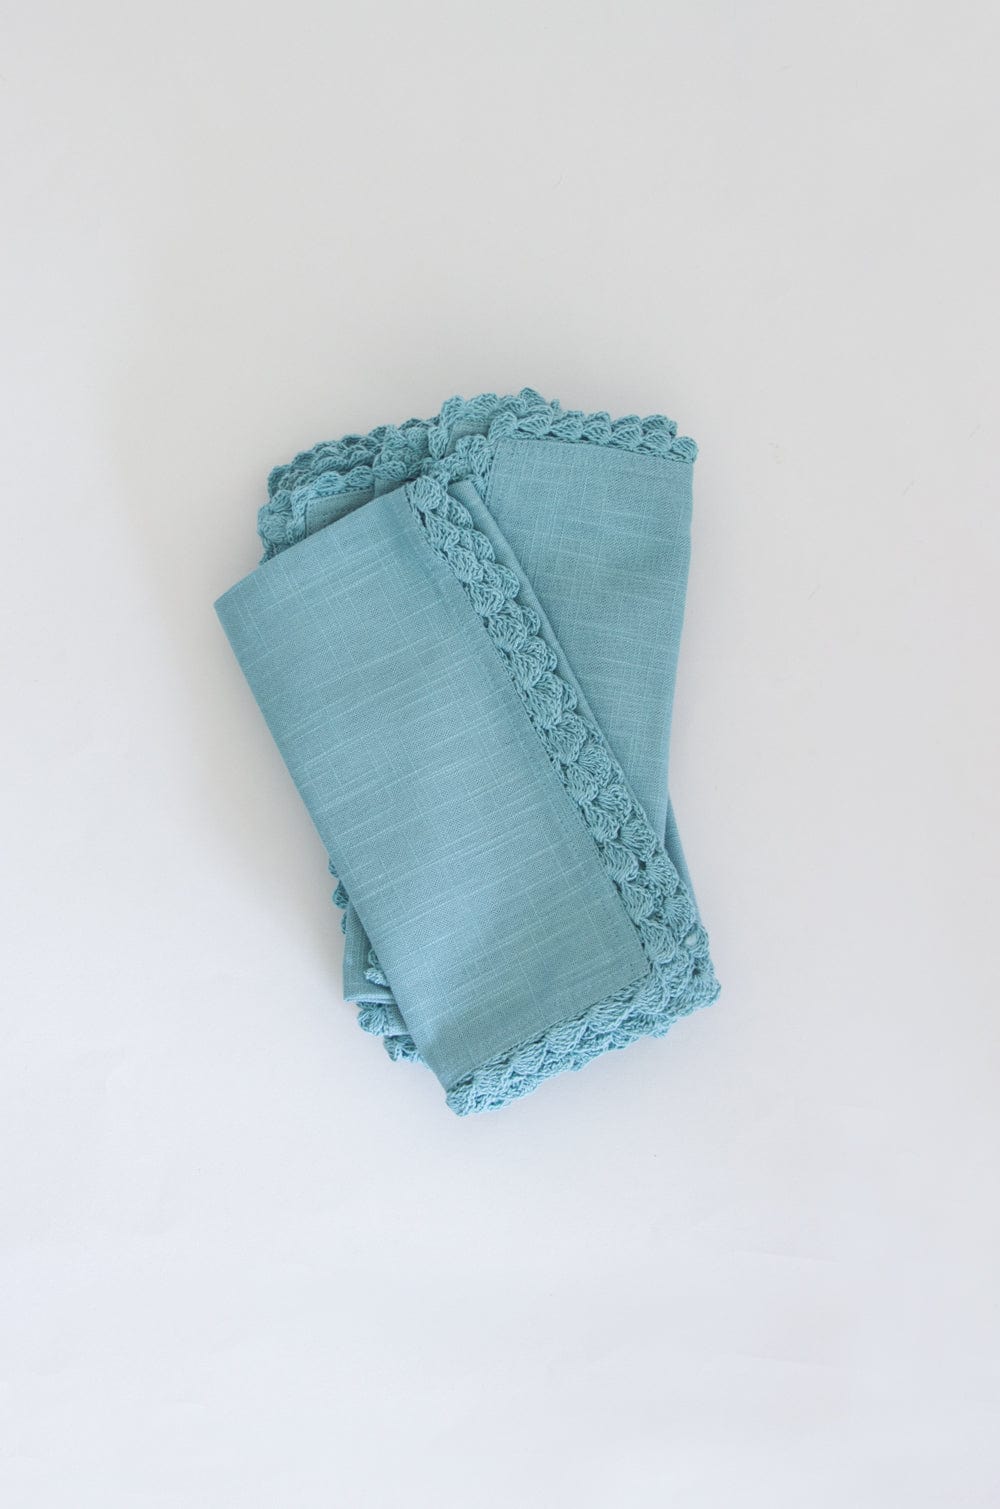 Rosemary Hand Crochet Napkins - Set of 6